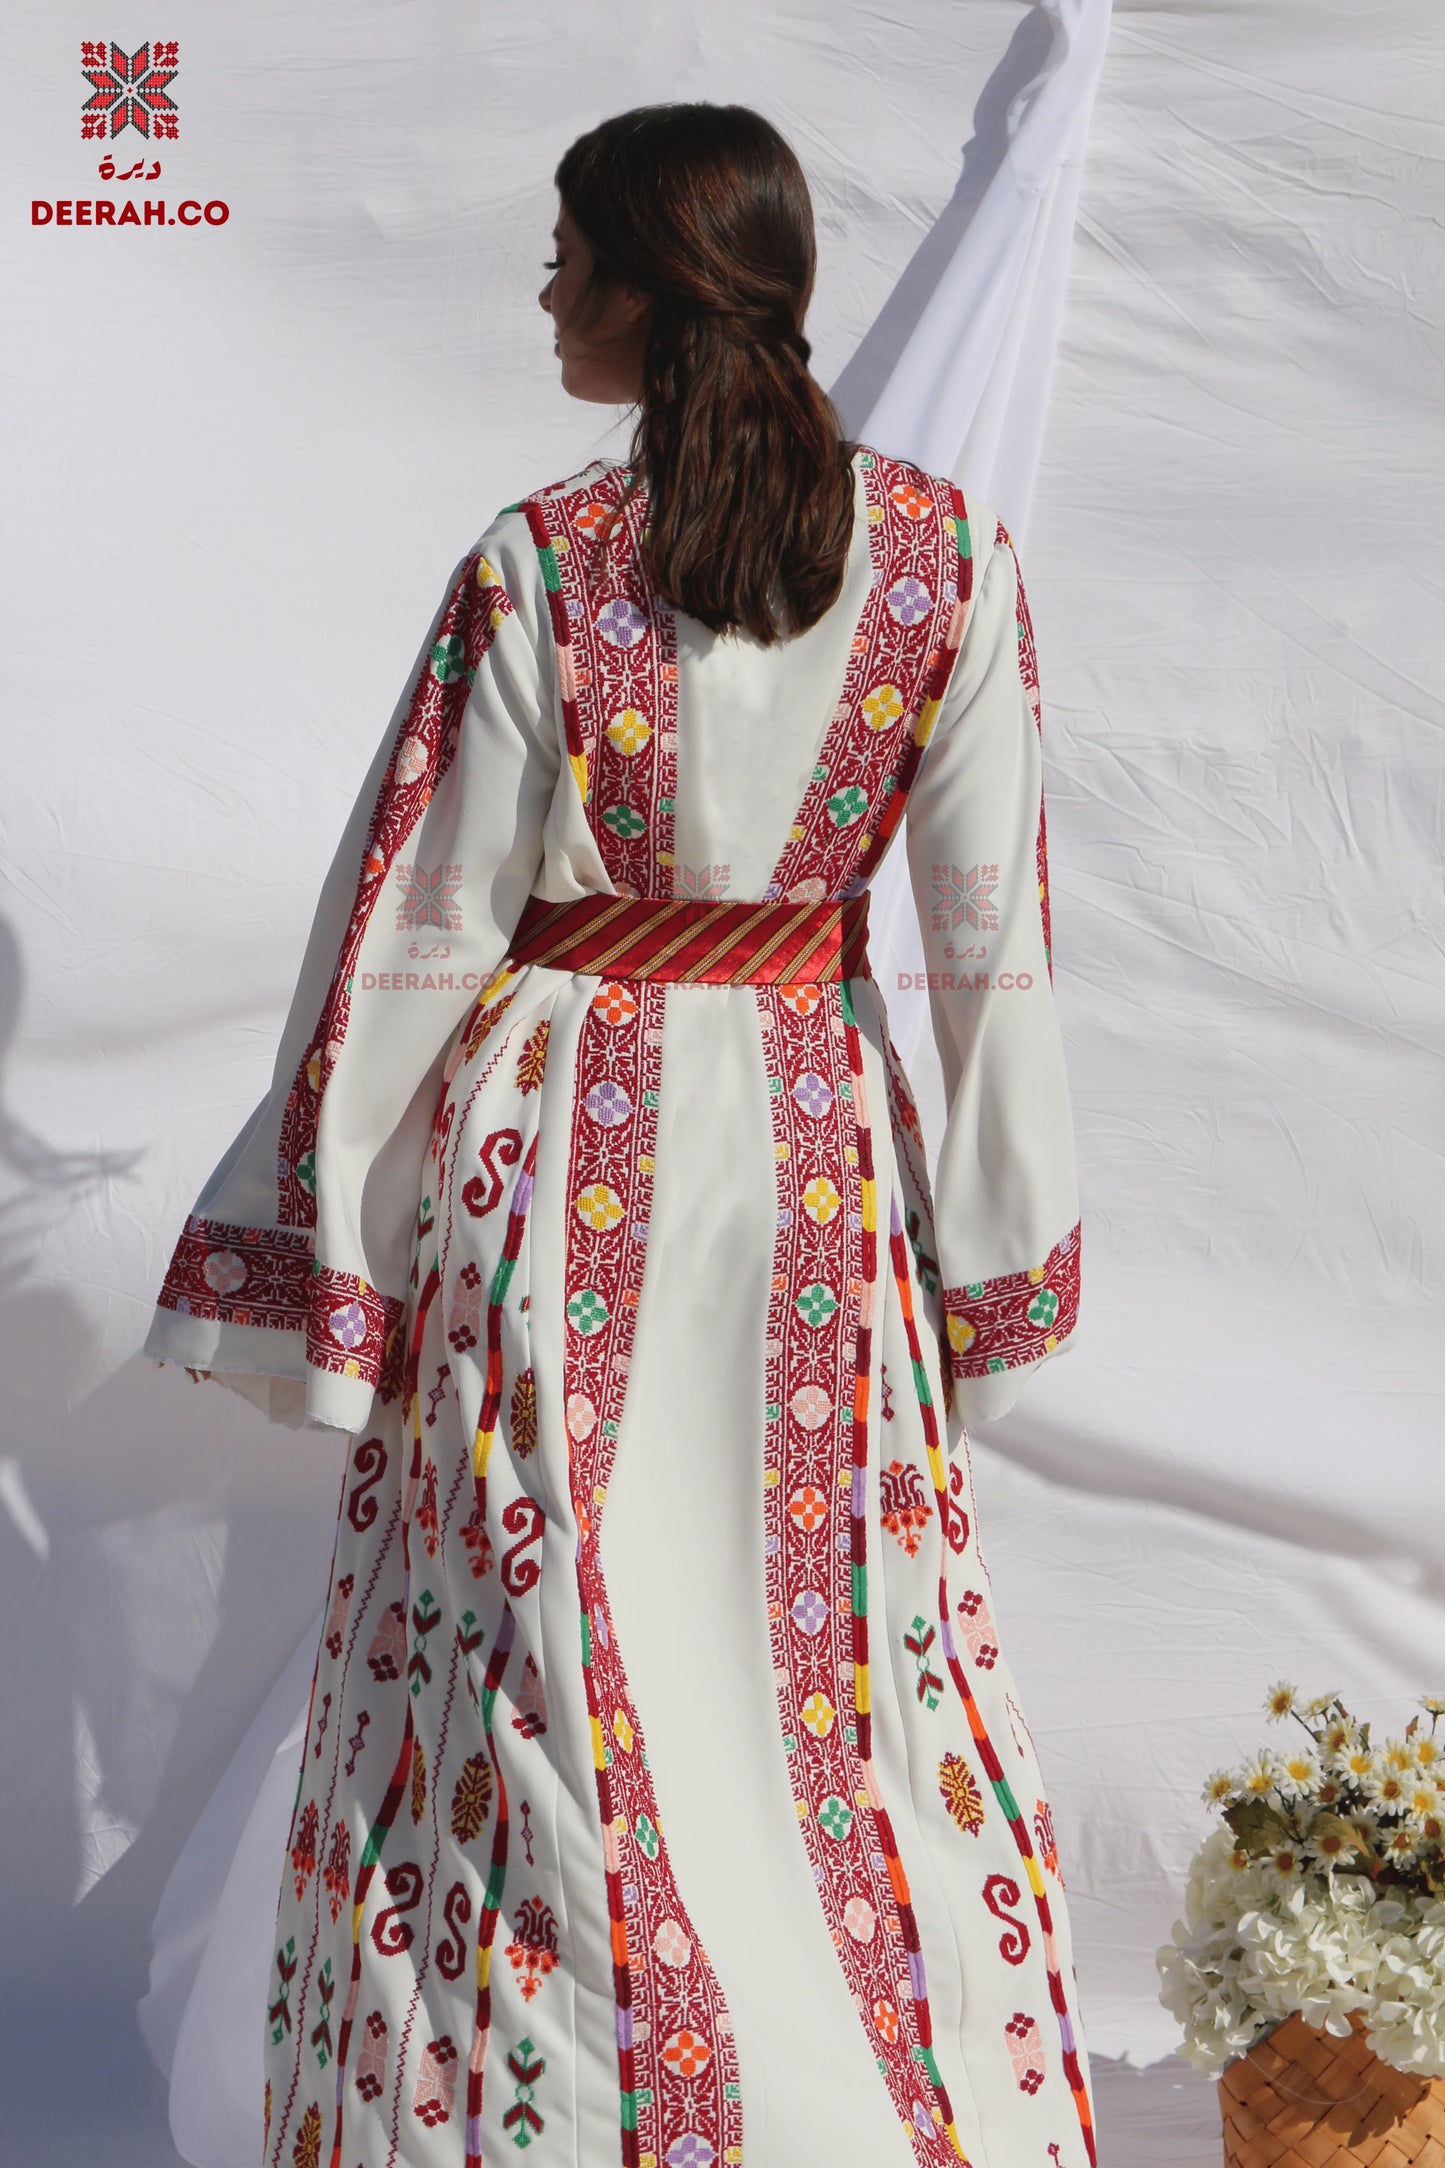 Noor - Hand Embroidered Colorful Palestinian Bridal Dress Deerah